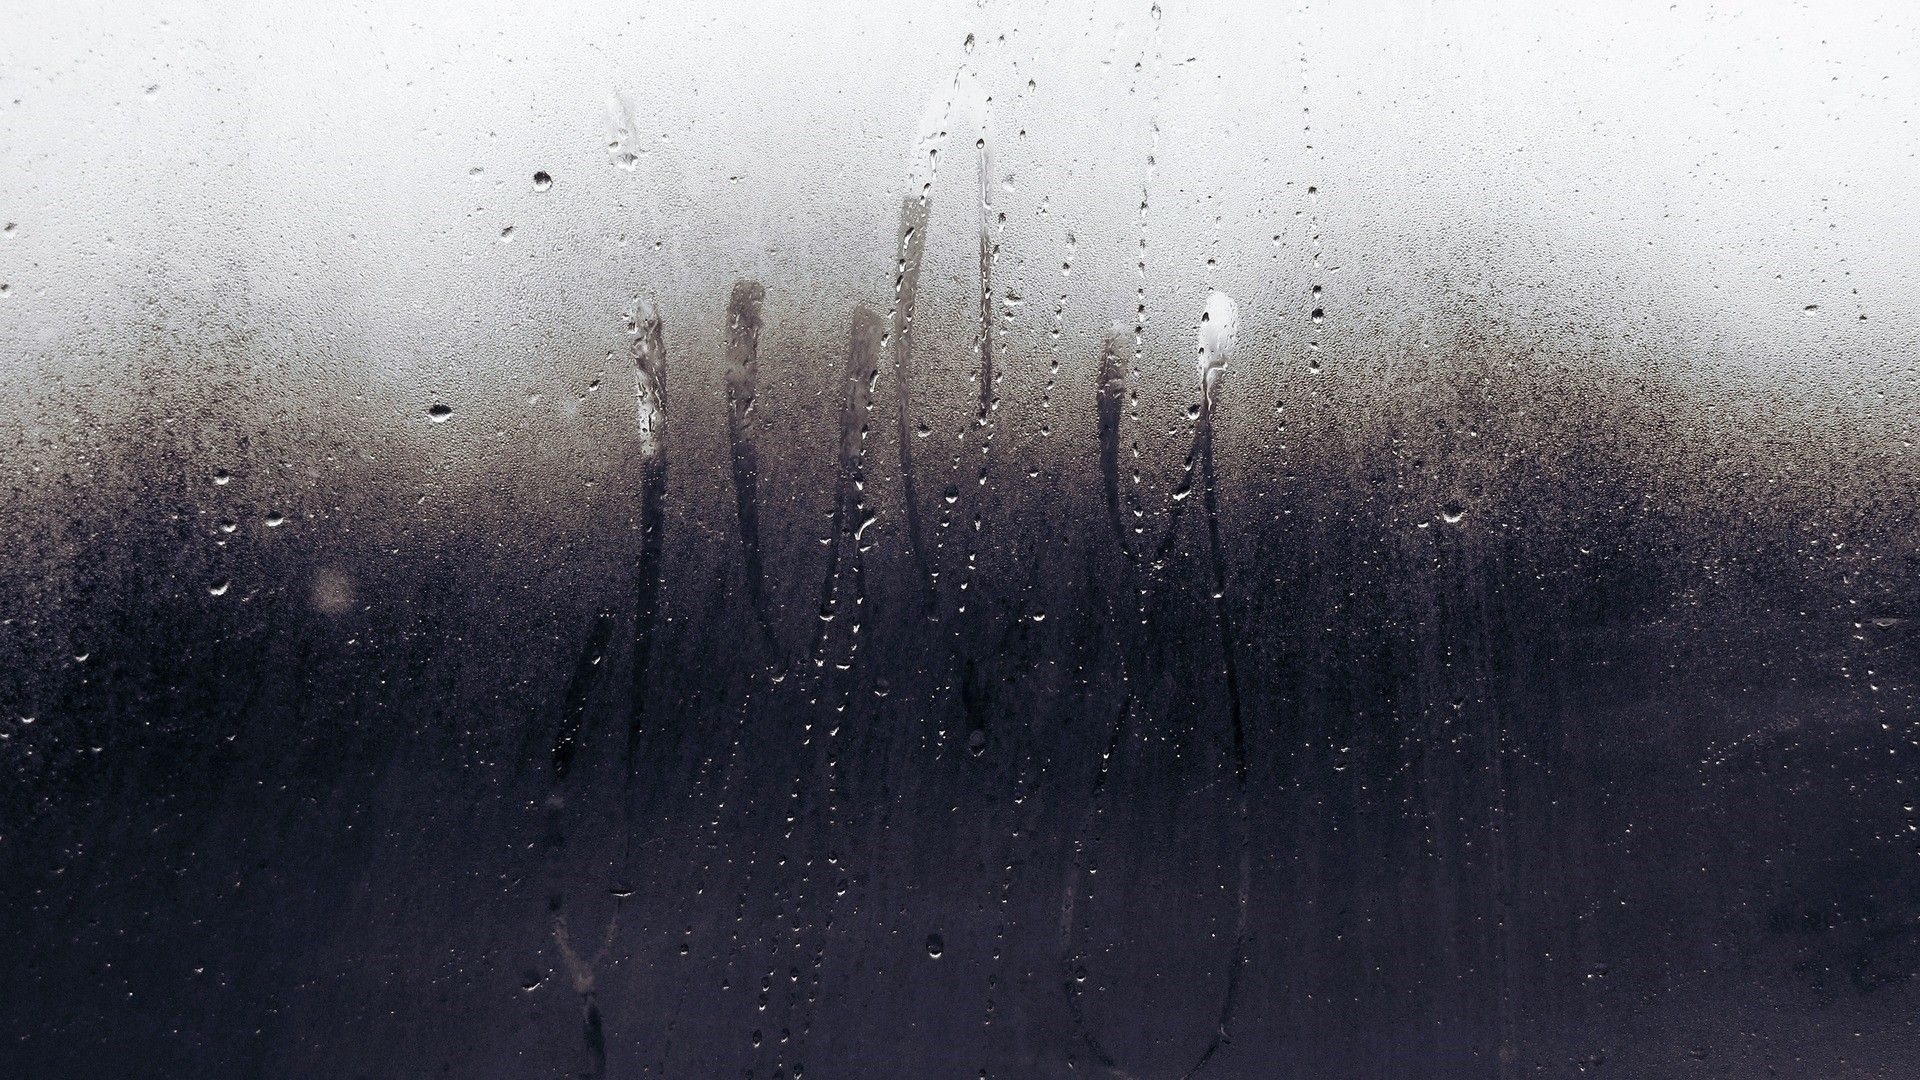 A black and white photo of rain on the window - Rain